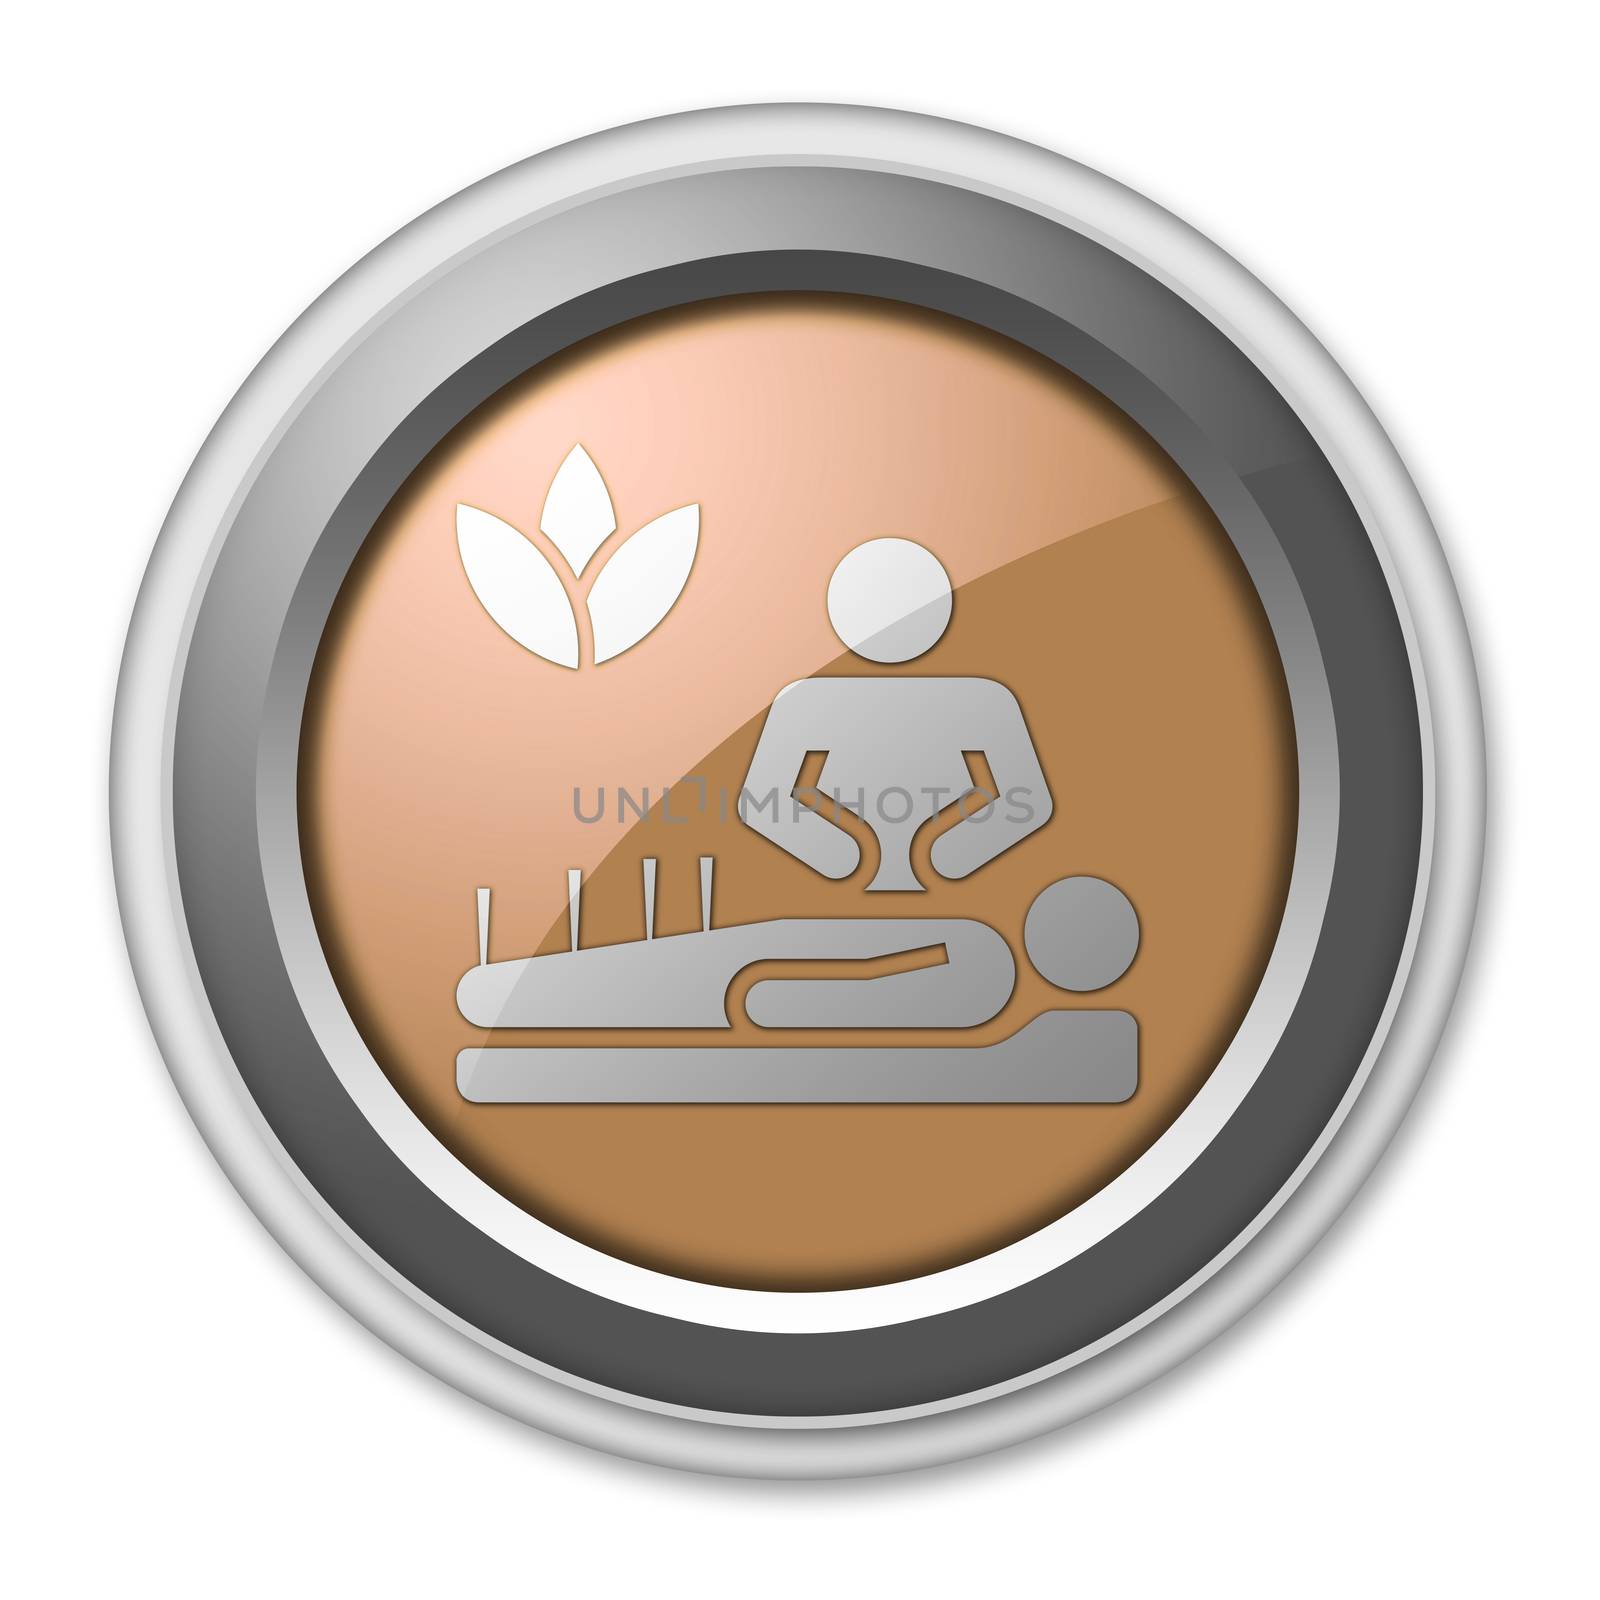 Icon, Button, Pictogram Alternative Medicine by mindscanner